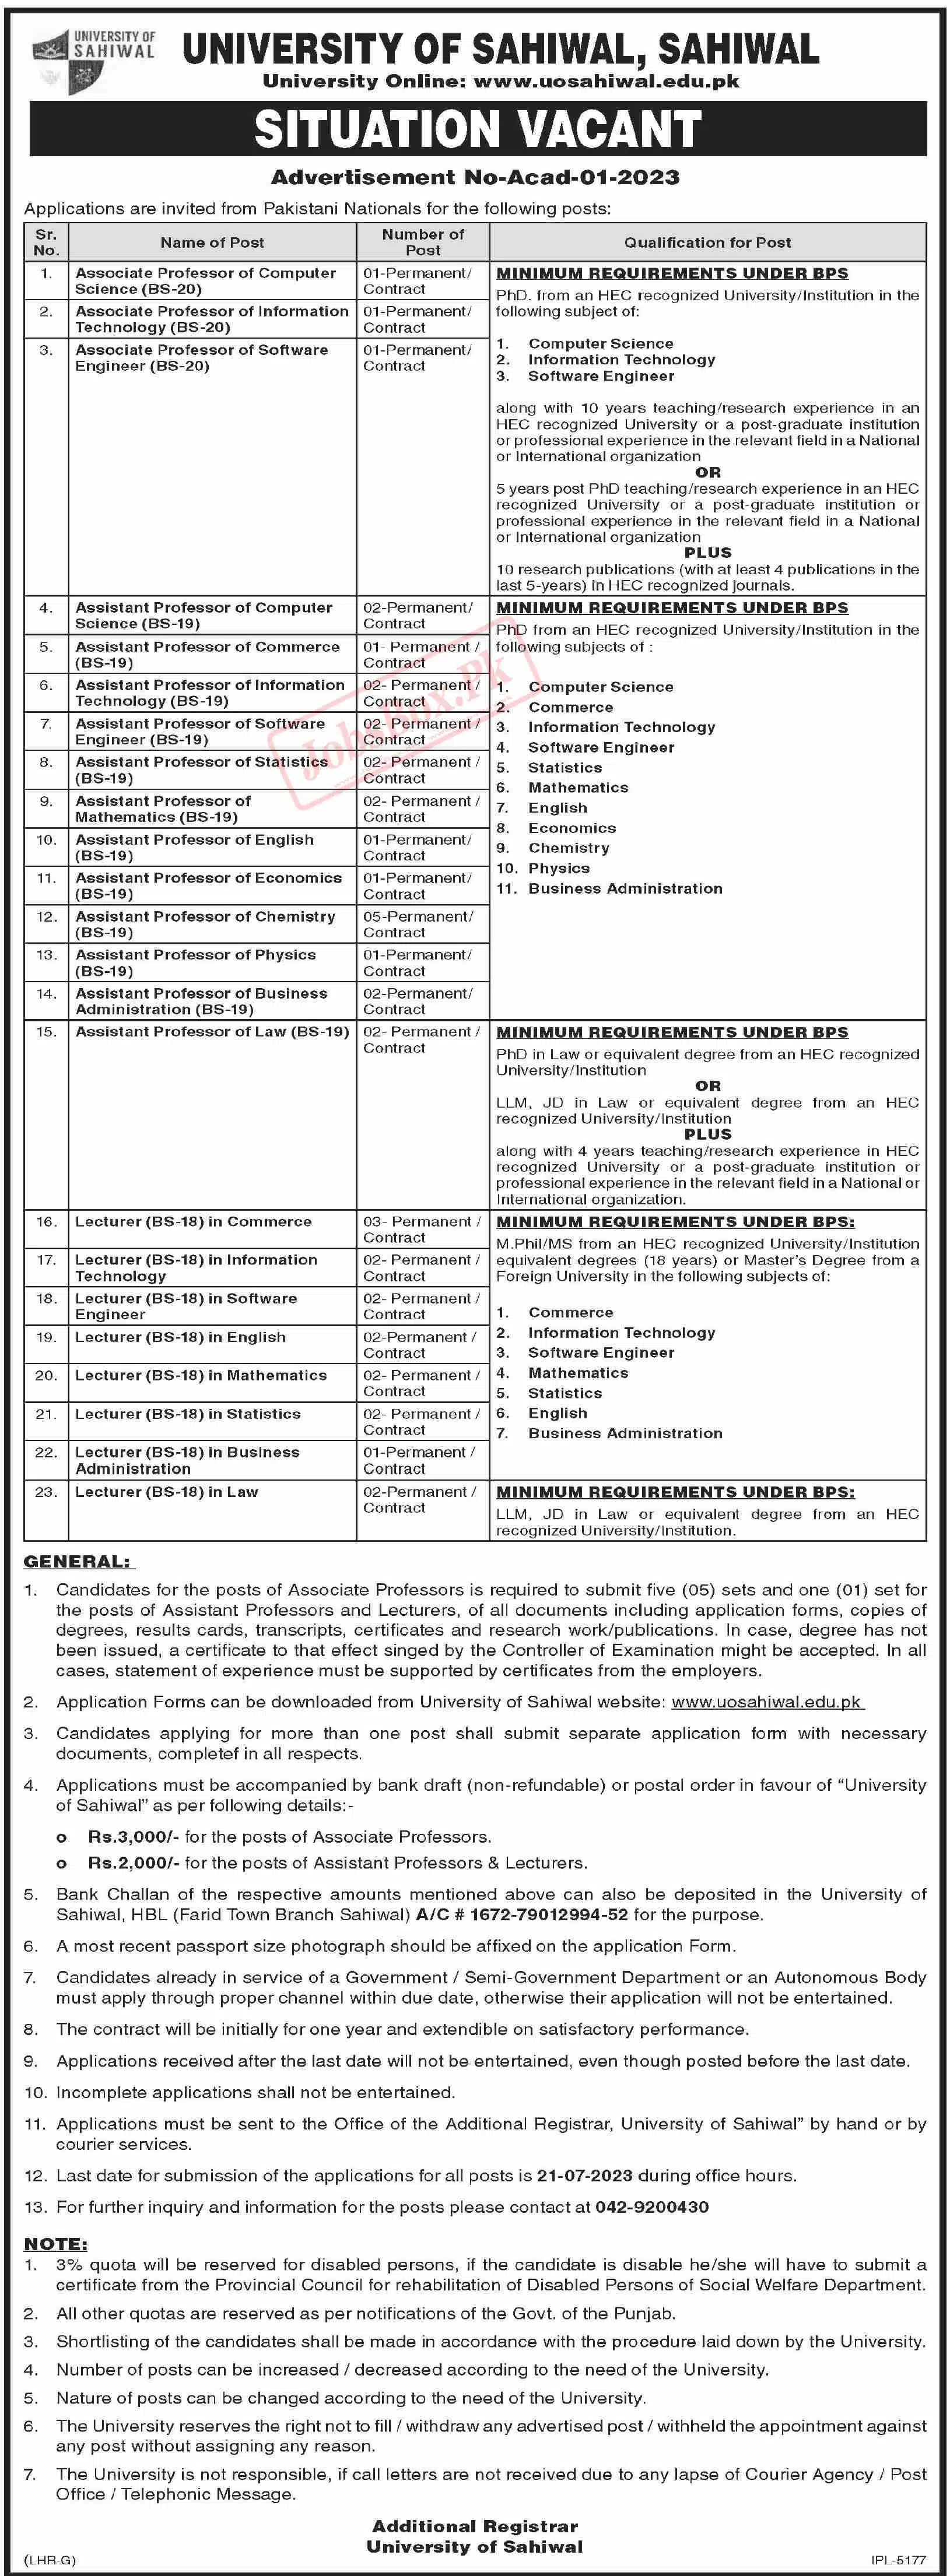 University of Sahiwal Jobs 2023 - Application Form via uosahiwal.edu.pk